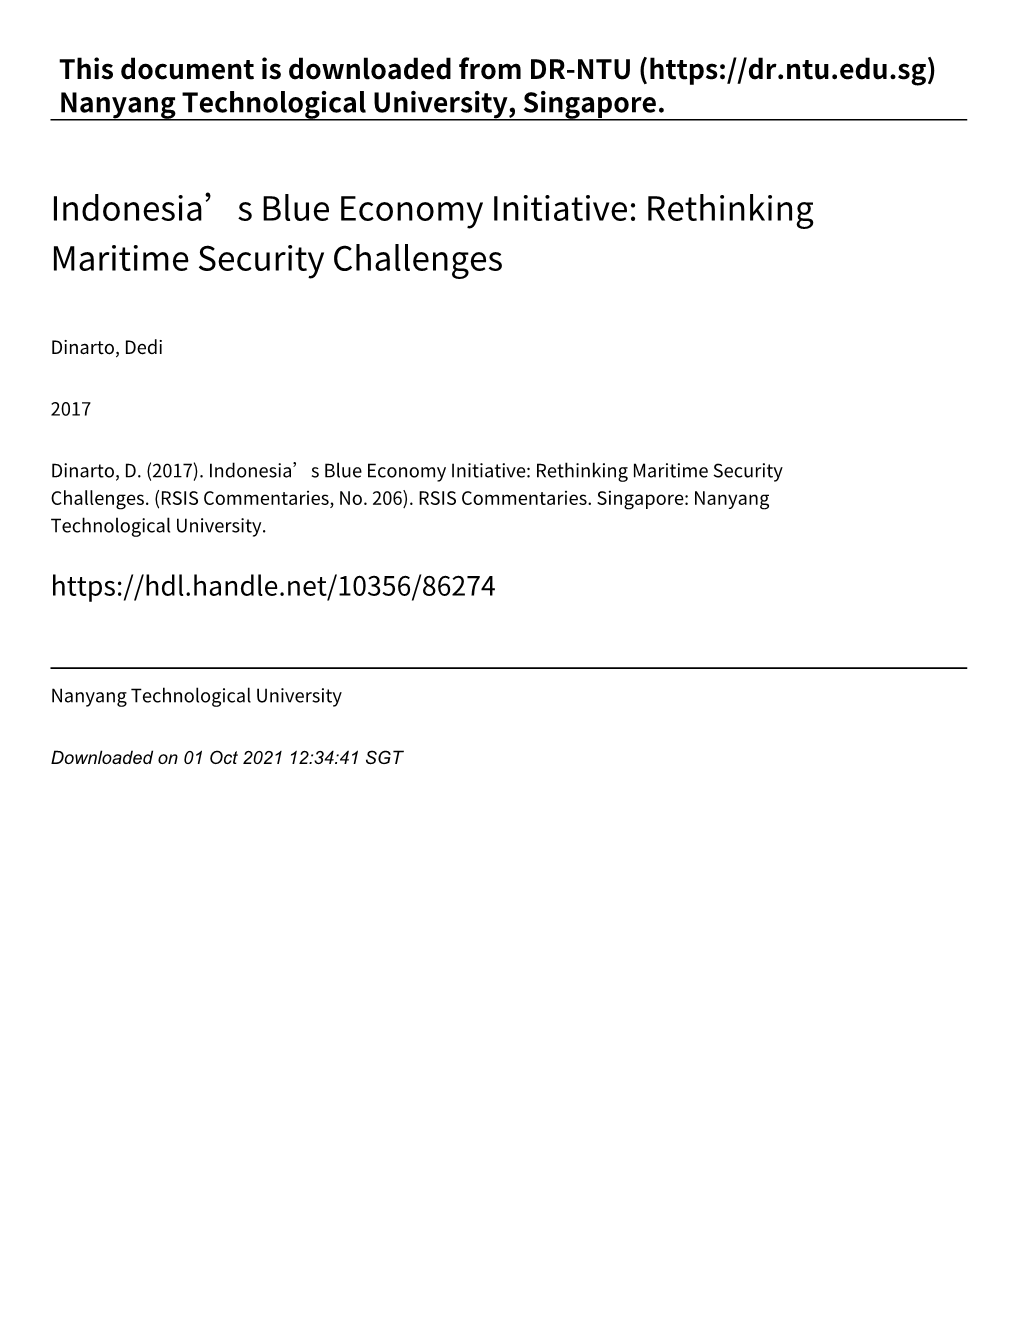 Indonesia's Blue Economy Initiative: Rethinking Maritime Security Challenges